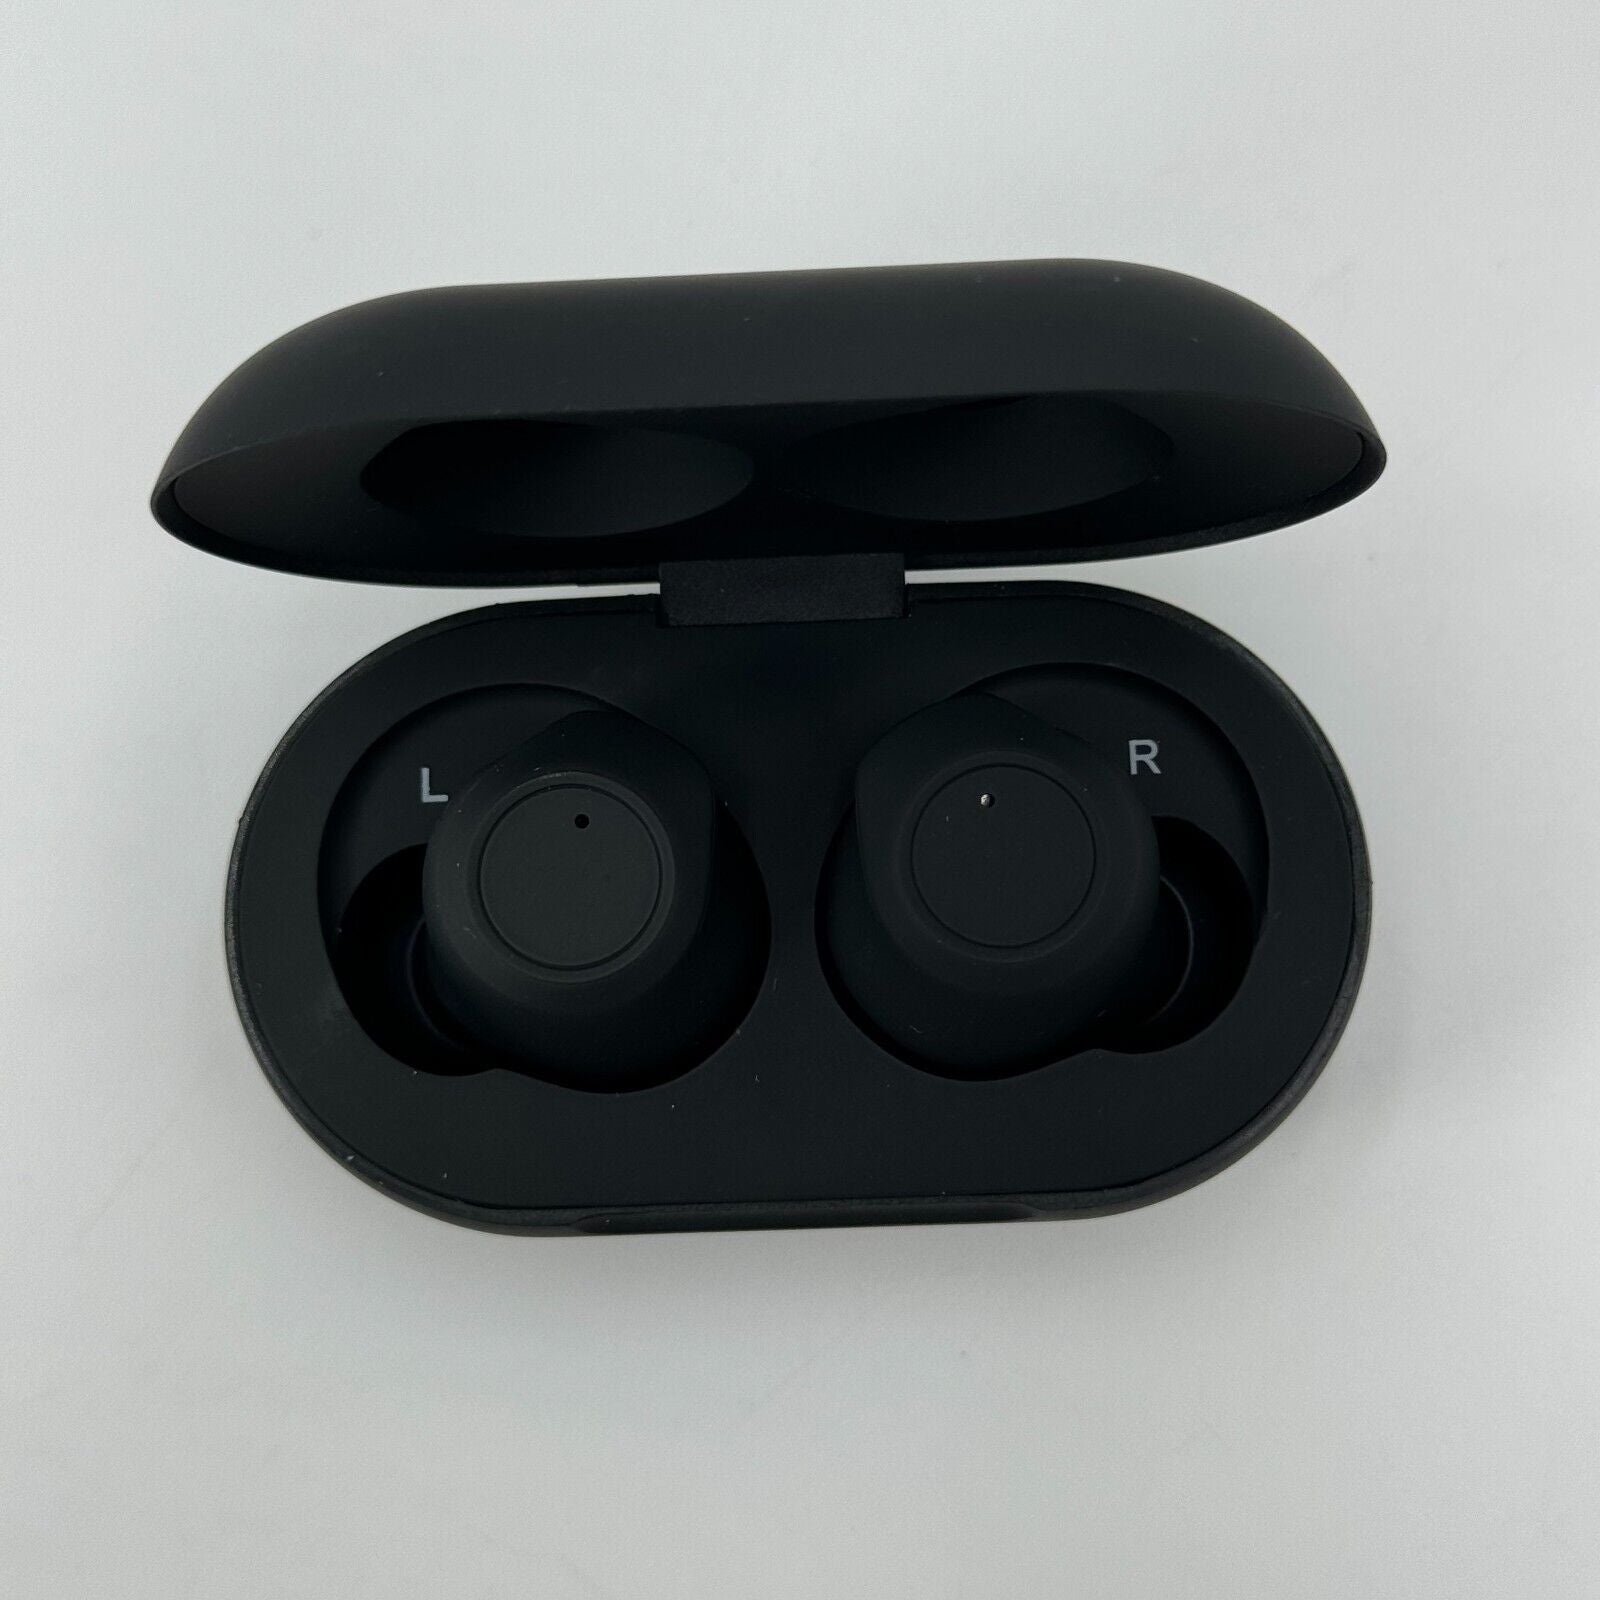 Acoustix True Wireless Stereo Earbuds Bluetooth 5.0 Black Brand New